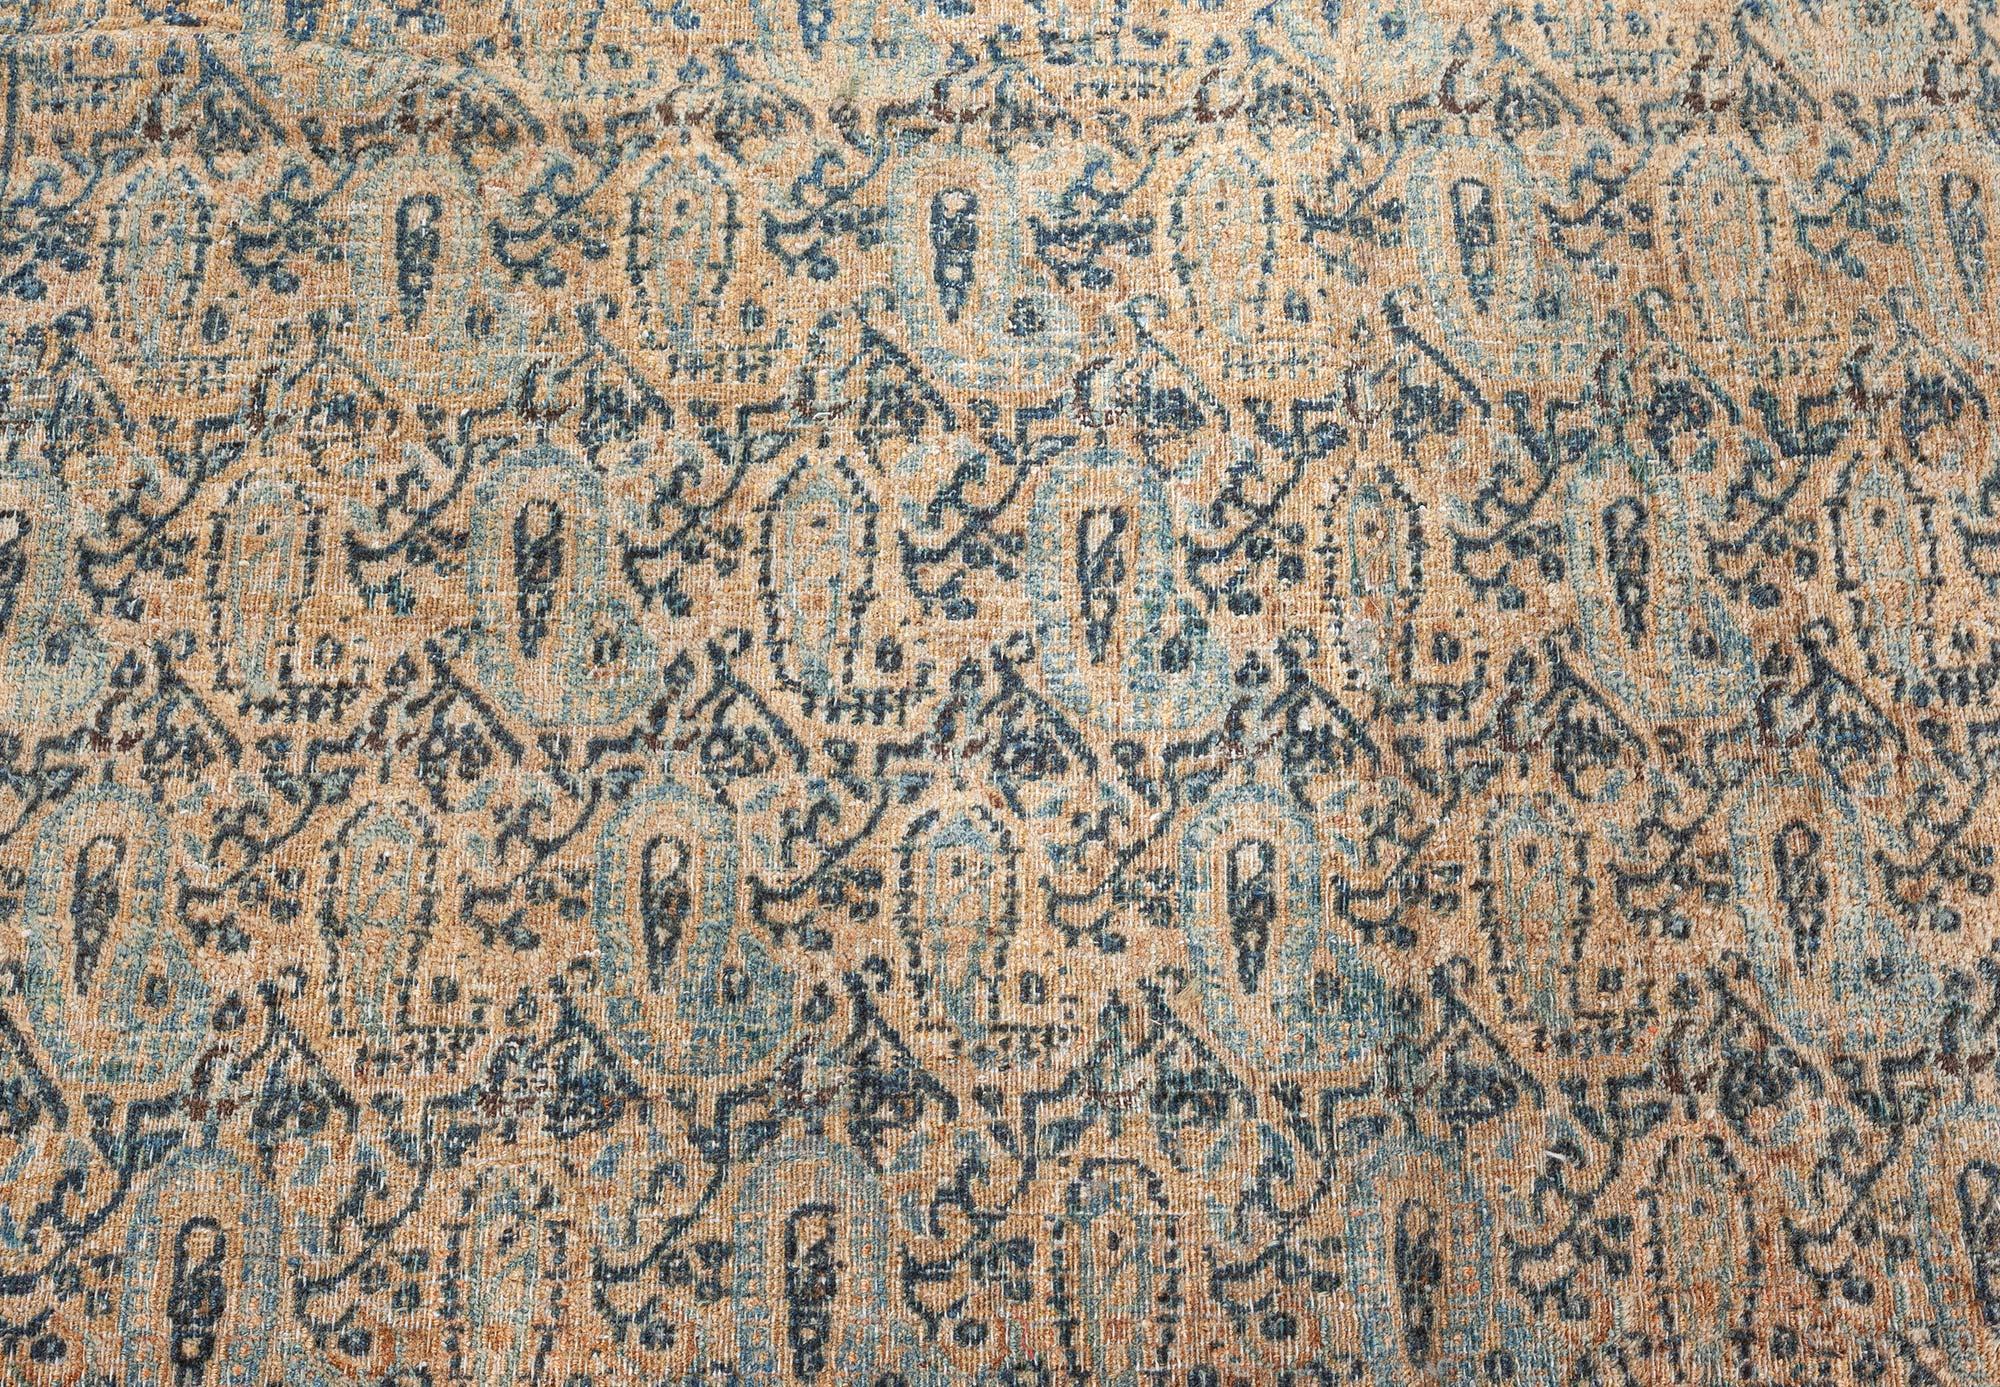 Authentic Persian Kirman handmade wool rug
Size: 4'9